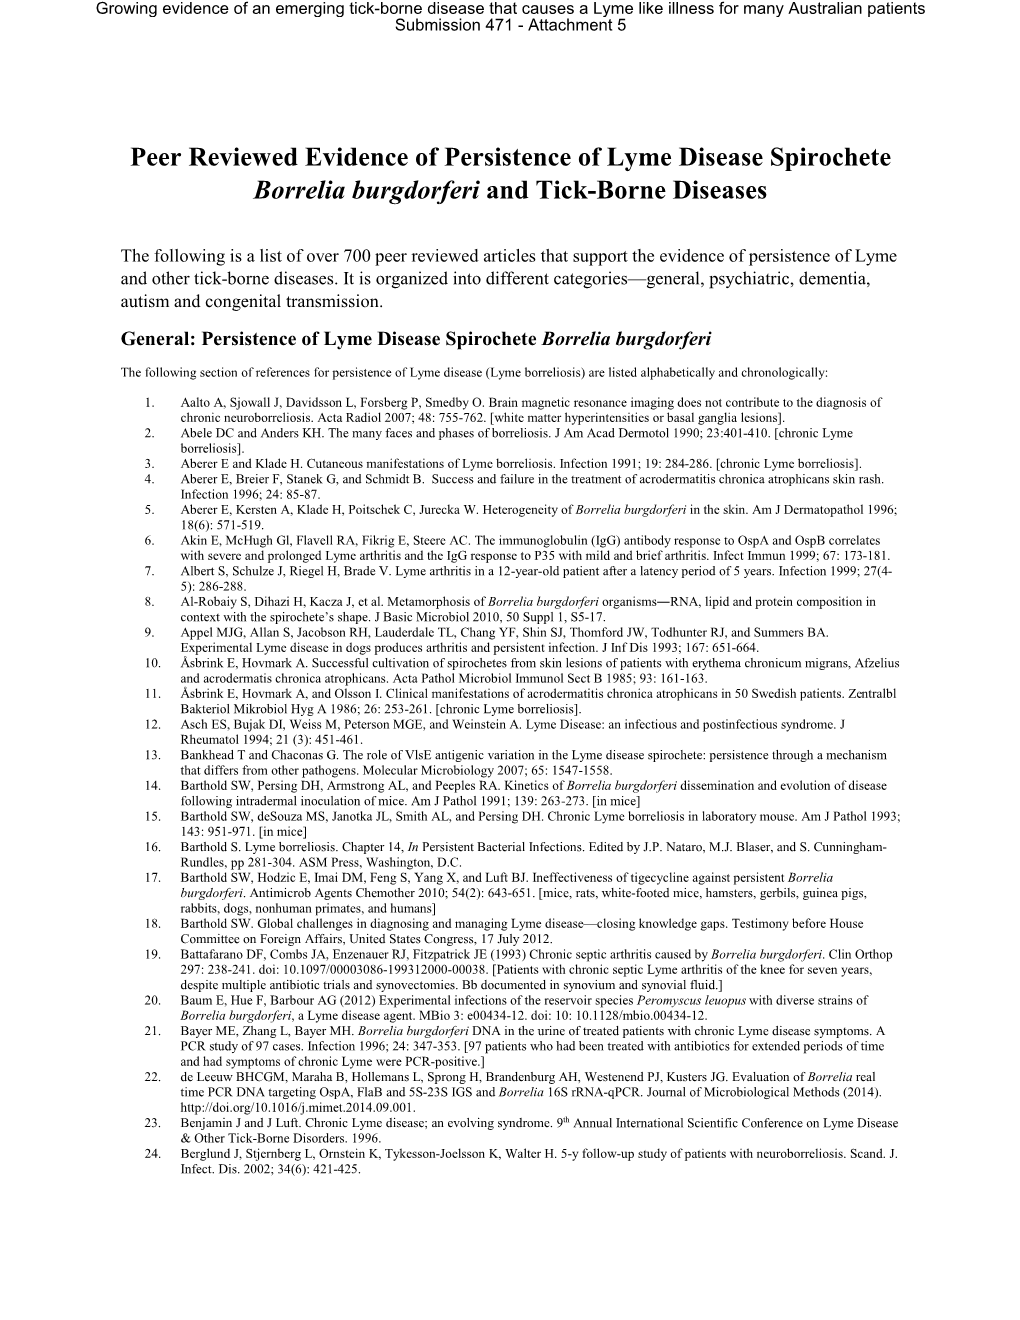 Peer Reviewed Evidence of Persistence of Lyme Disease Spirochete Borrelia Burgdorferi and Tick-Borne Diseases